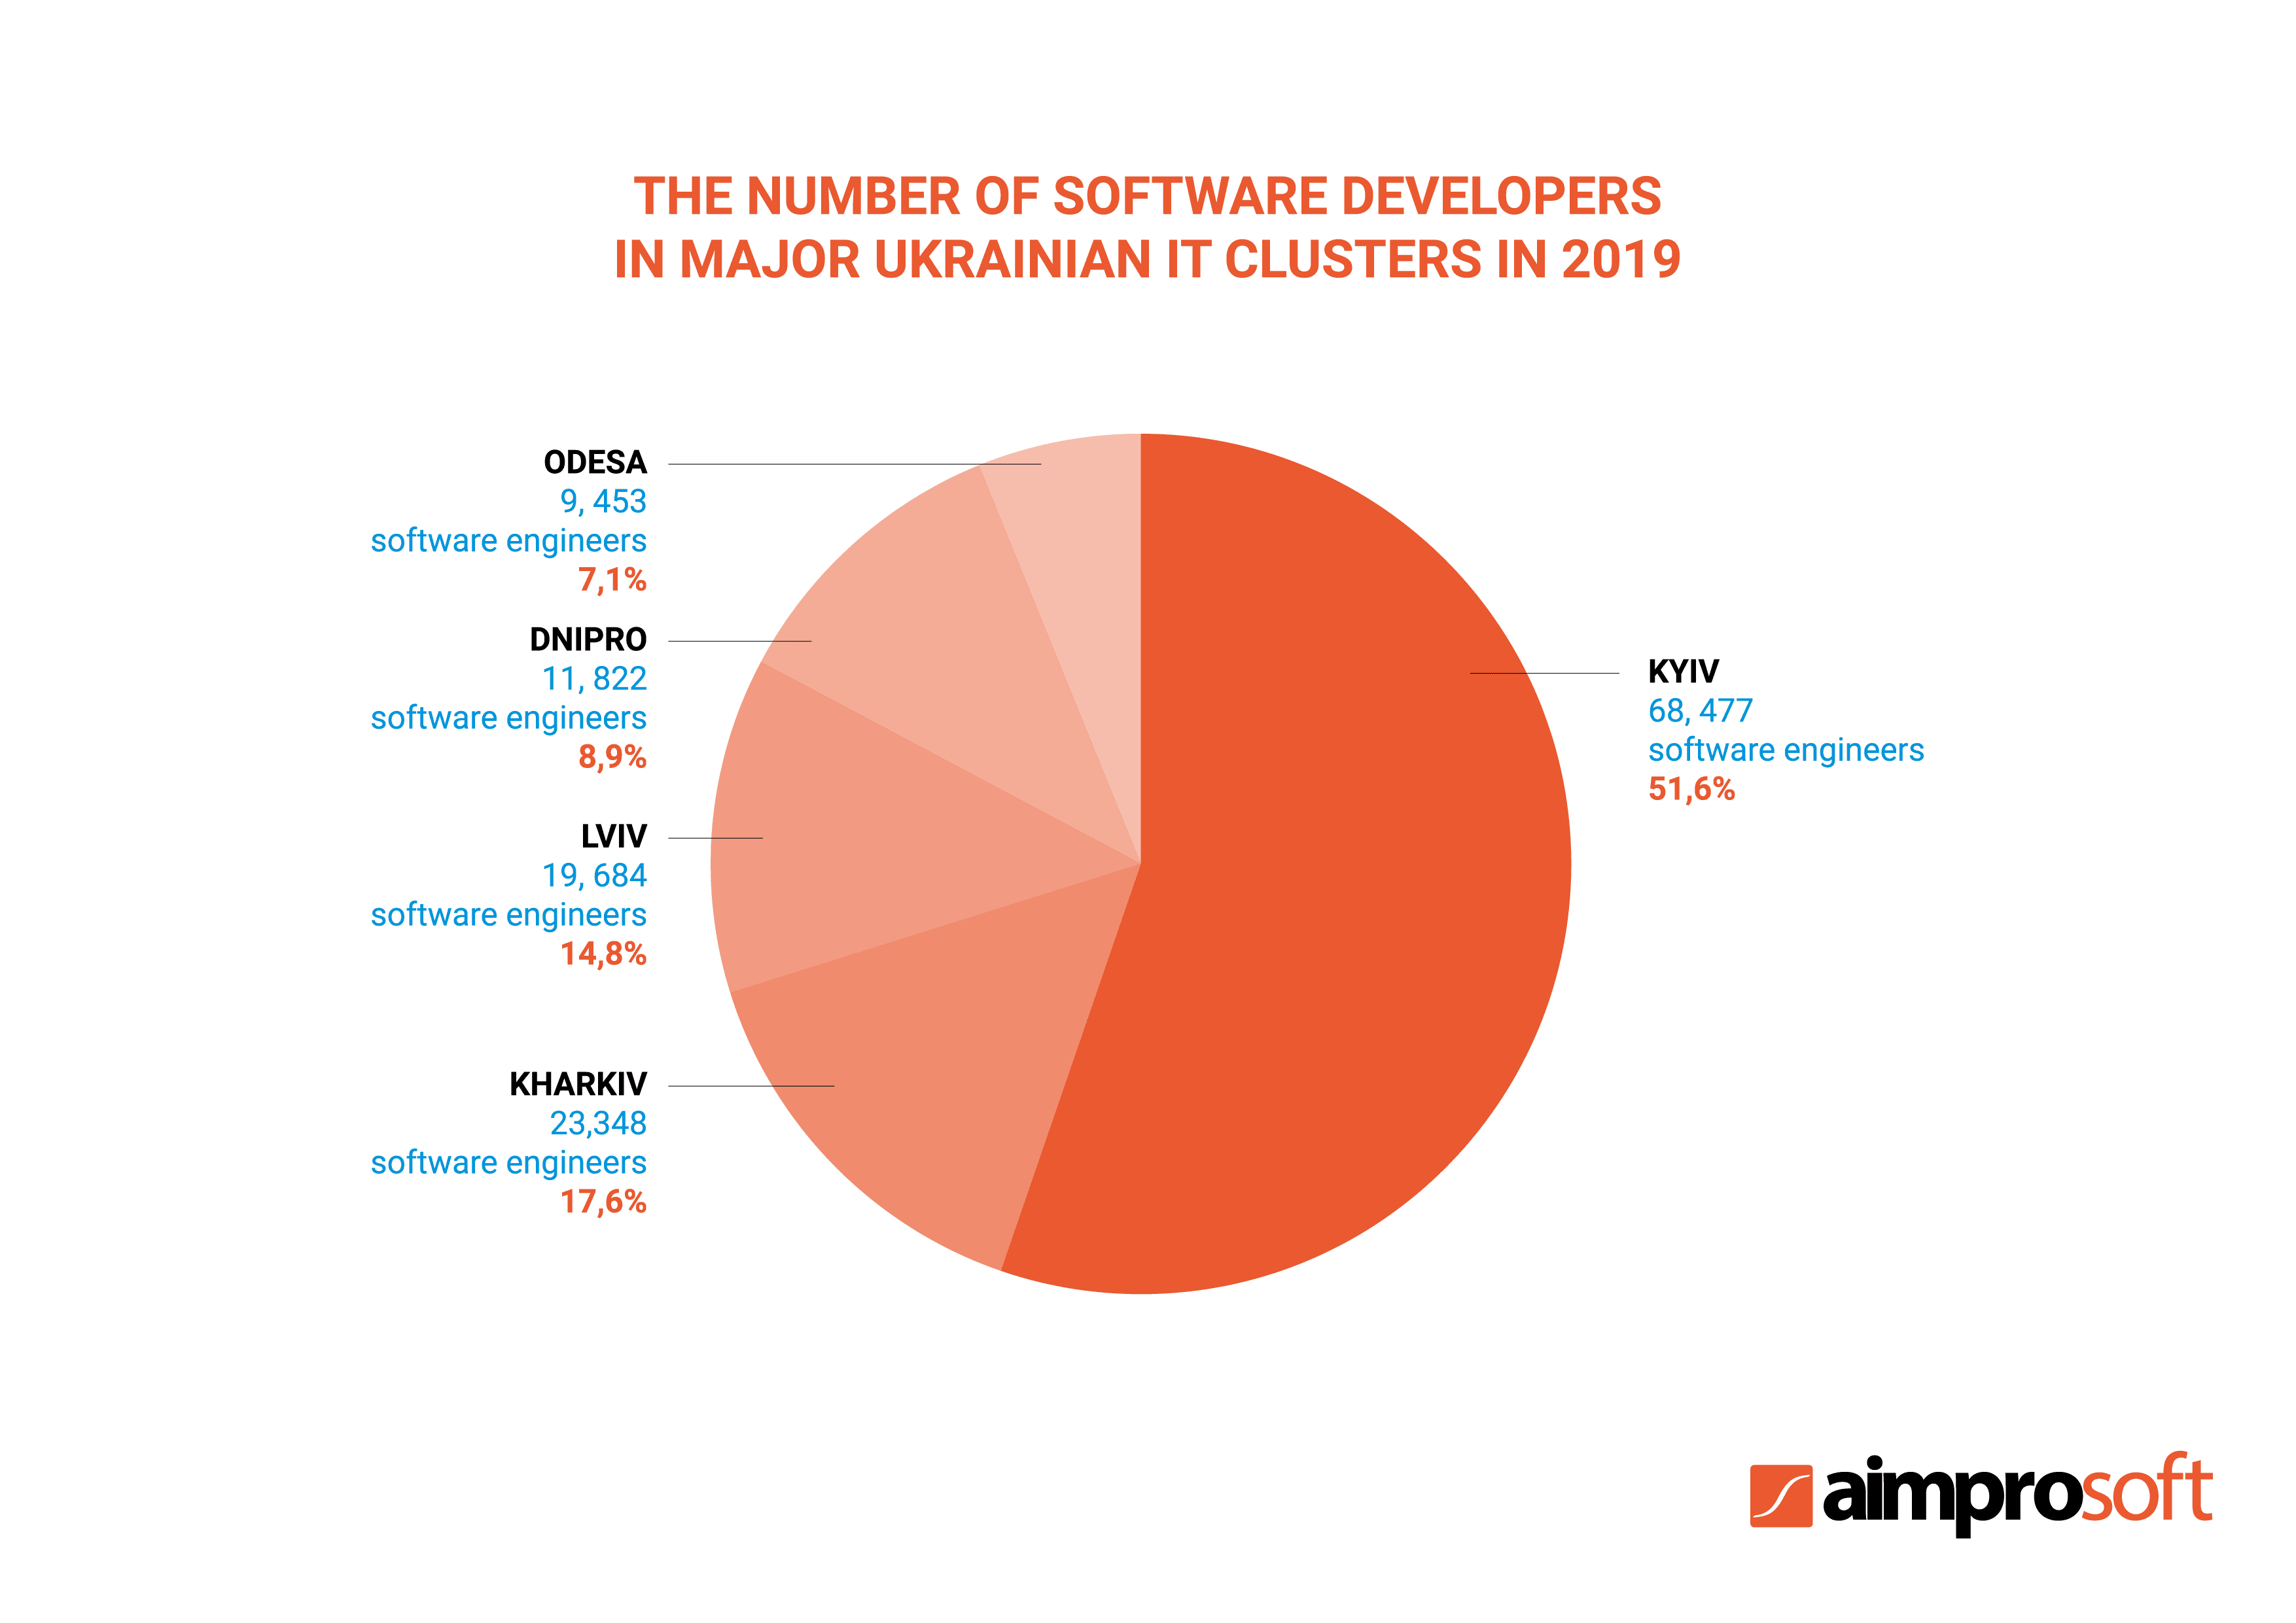 The number of software developers in major Ukrainian IT clusters in 2019